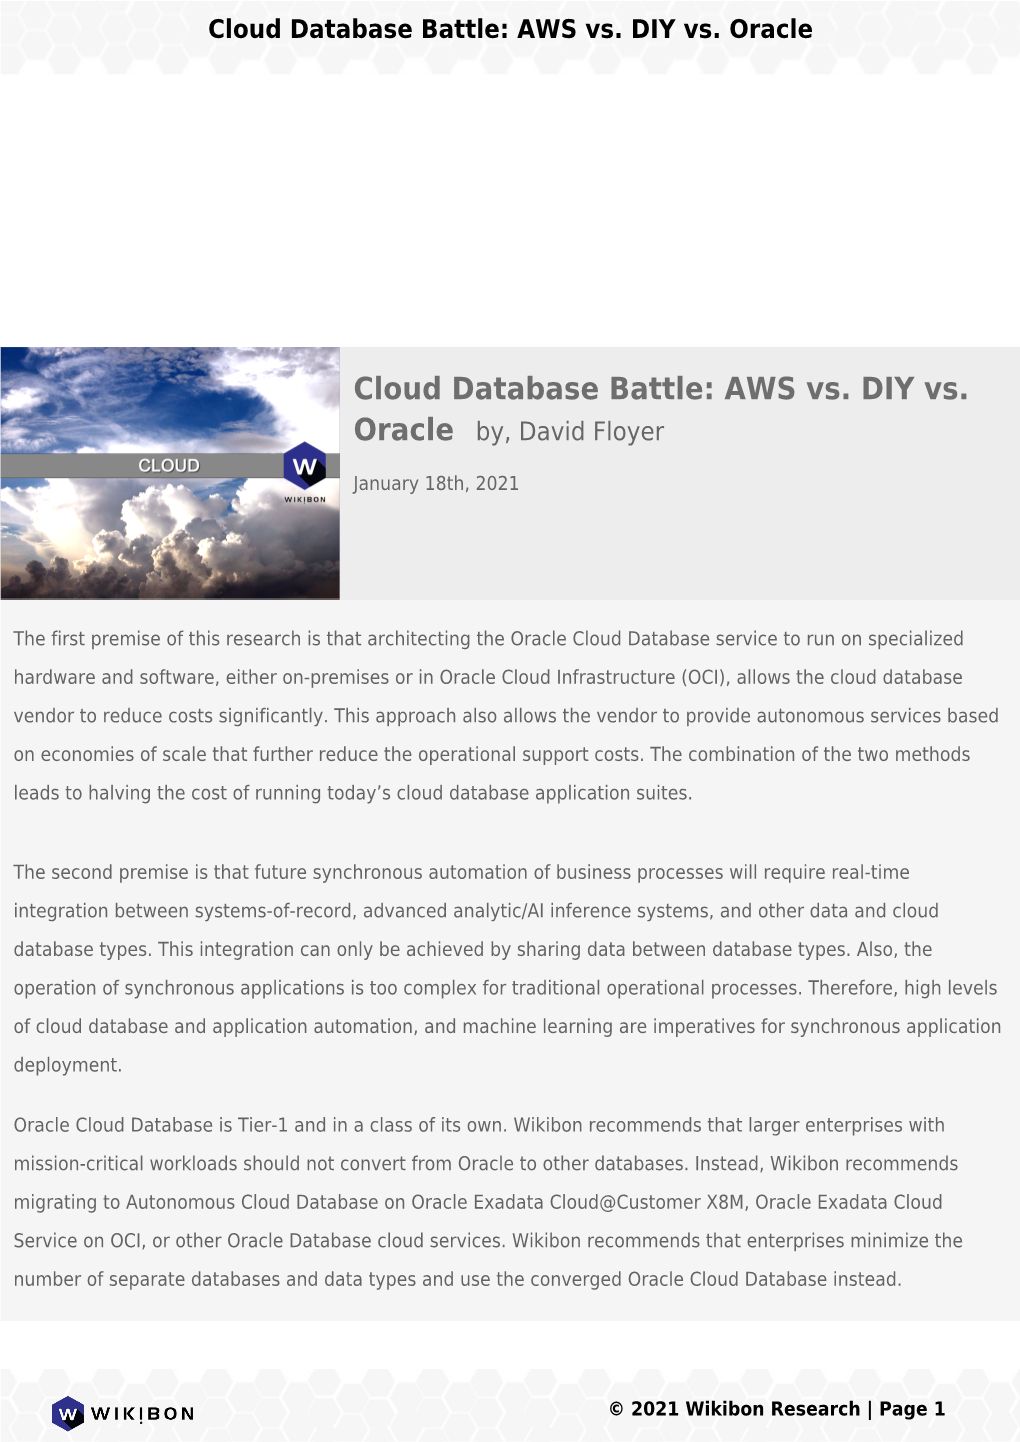 Cloud Database Battle: AWS Vs. DIY Vs. Oracle